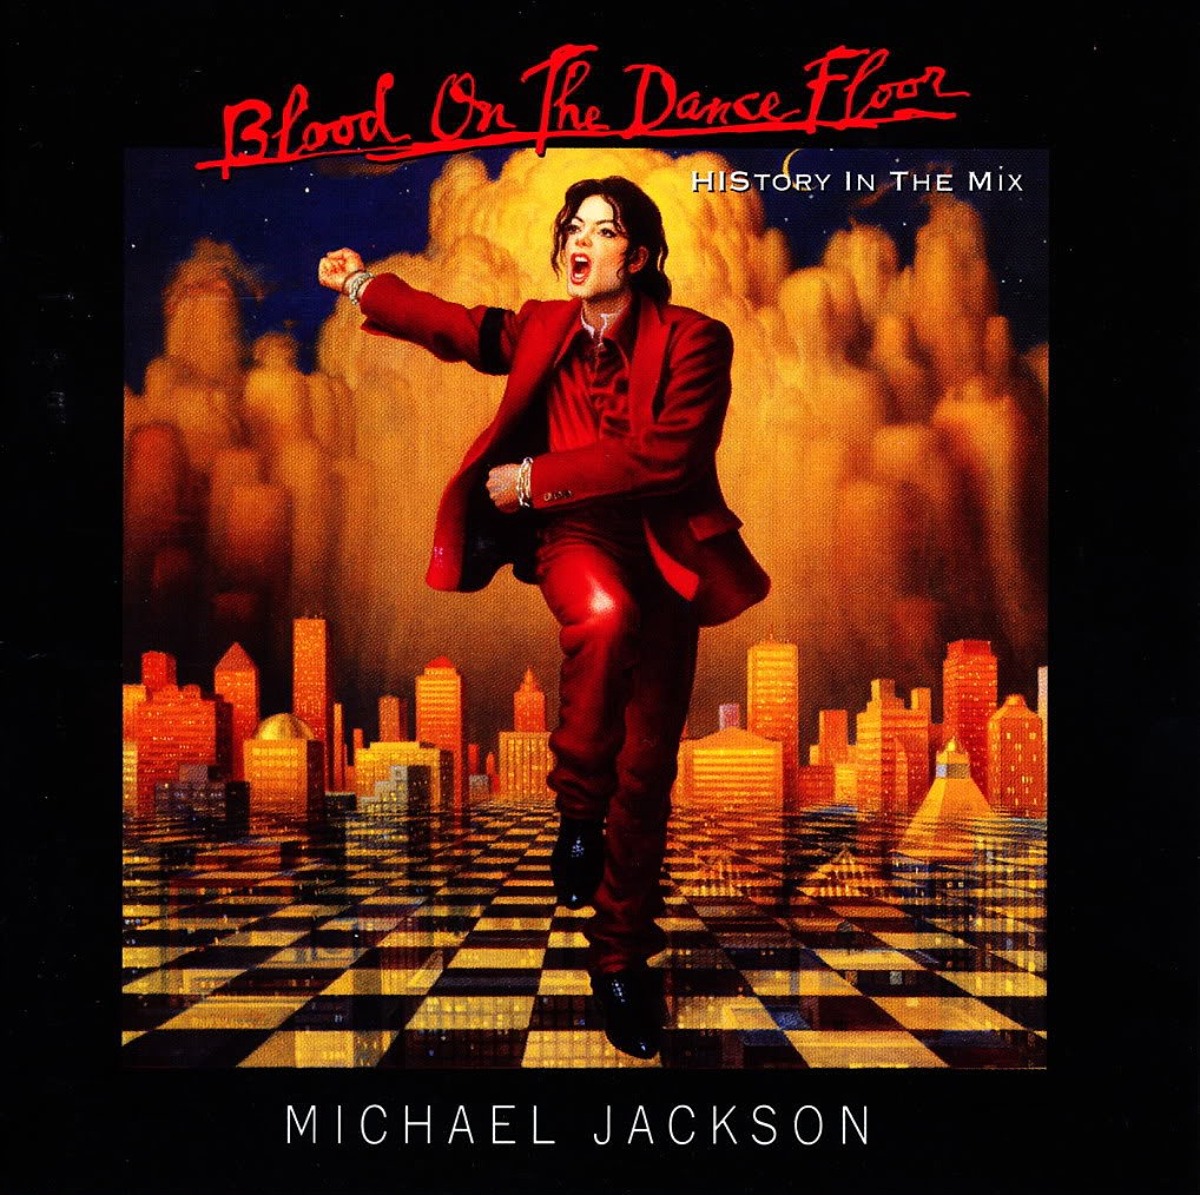 Cover of Michael Jackson's "Blood on the Dance Floor" album